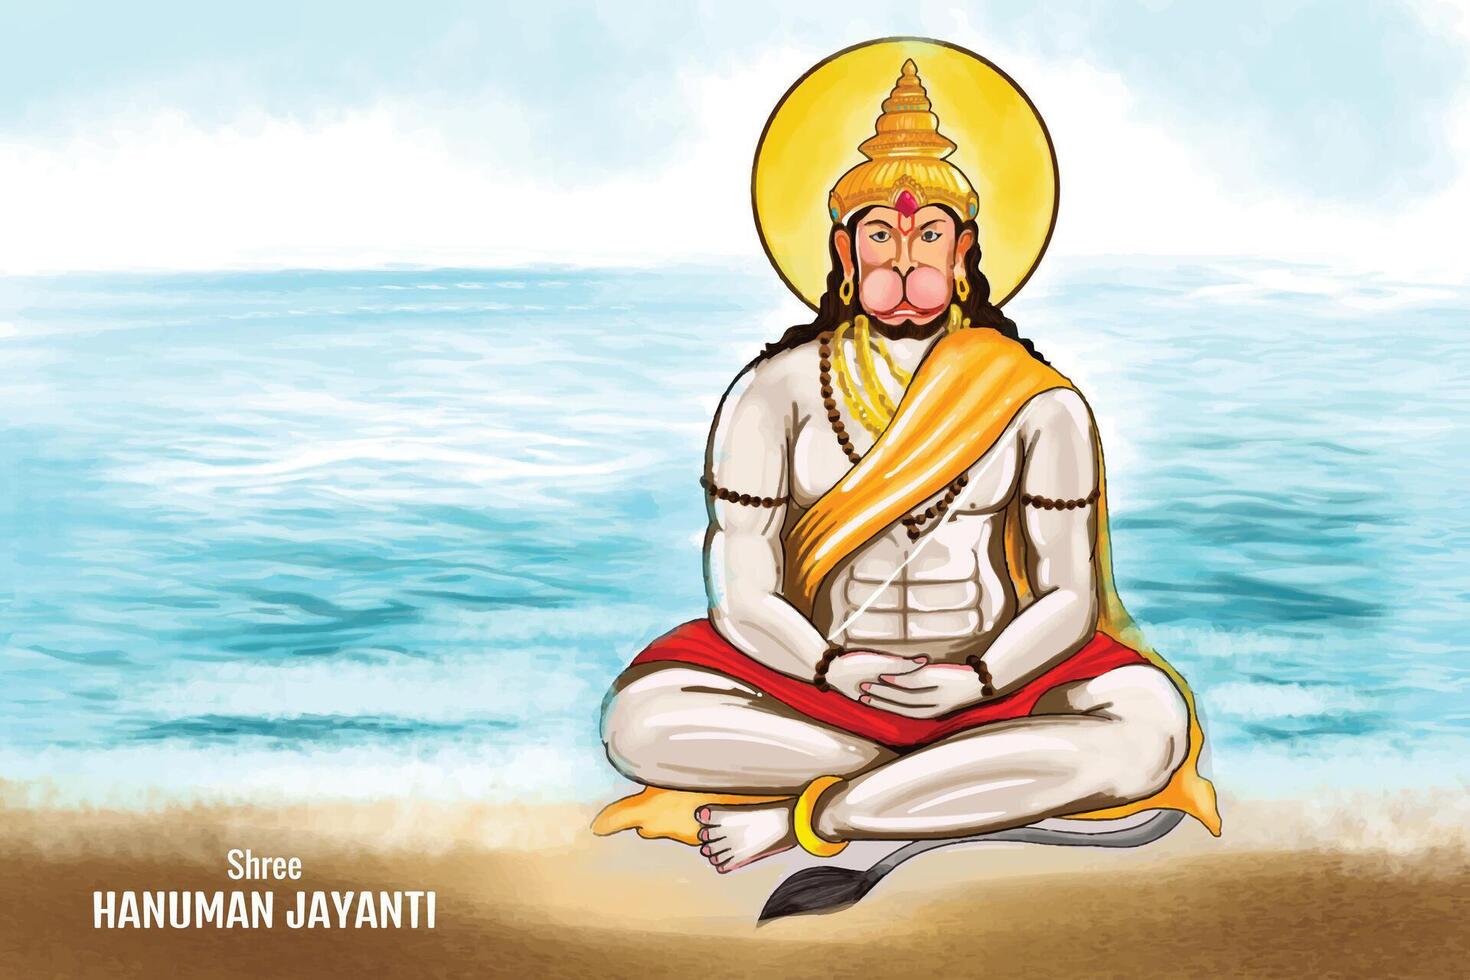 Haapy hanuman jayanti on lord hanuman celebration illustration background vector